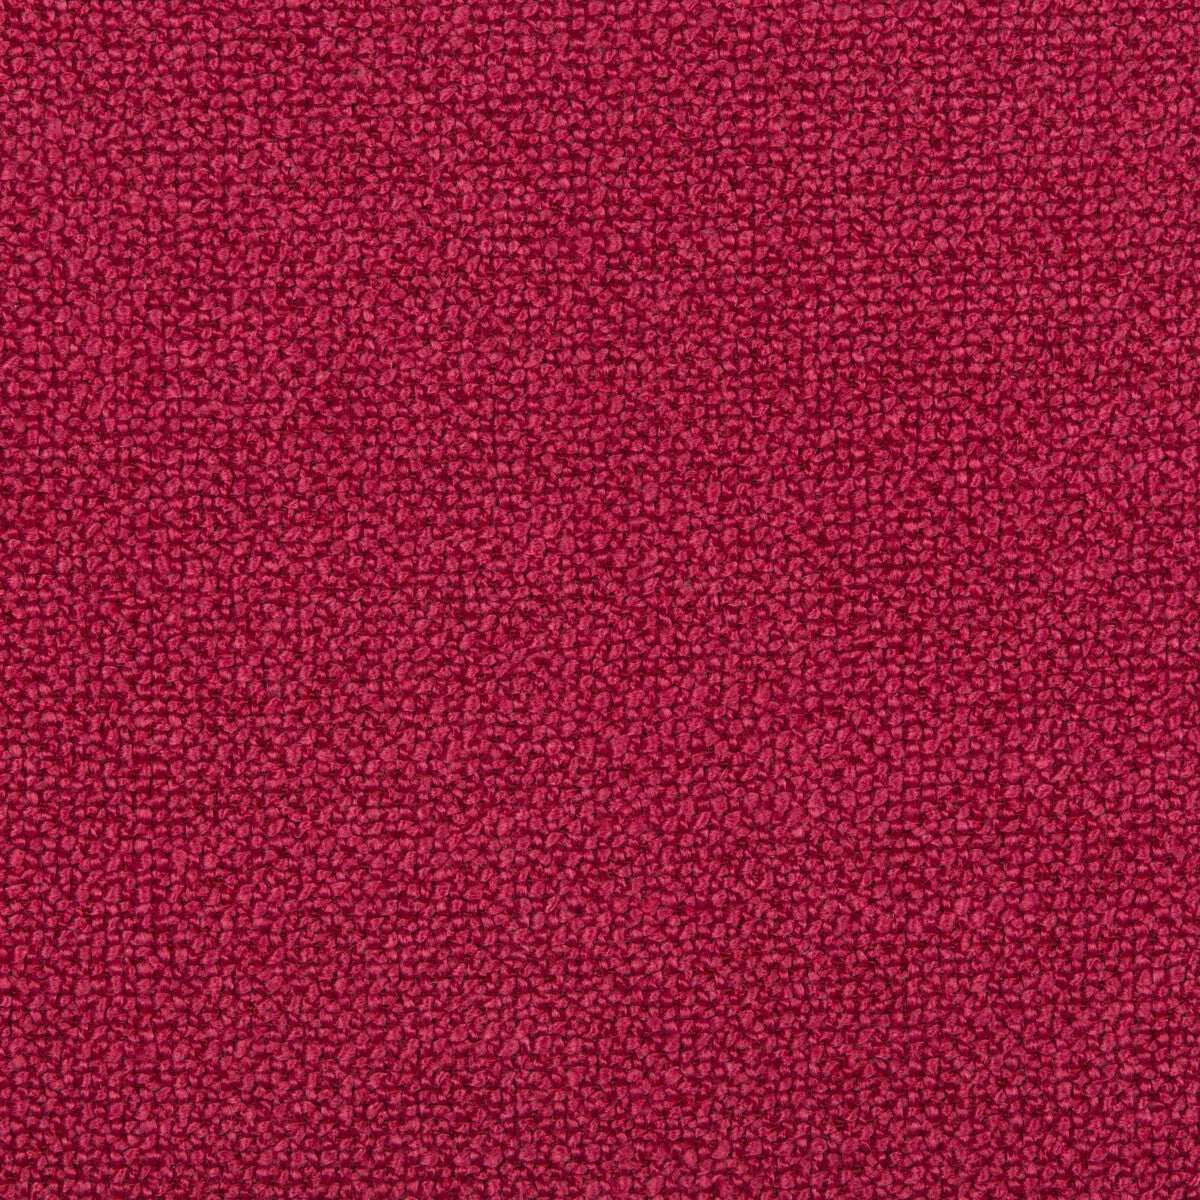 Kravet Smart fabric in 35379-97 color - pattern 35379.97.0 - by Kravet Smart in the Performance Kravetarmor collection